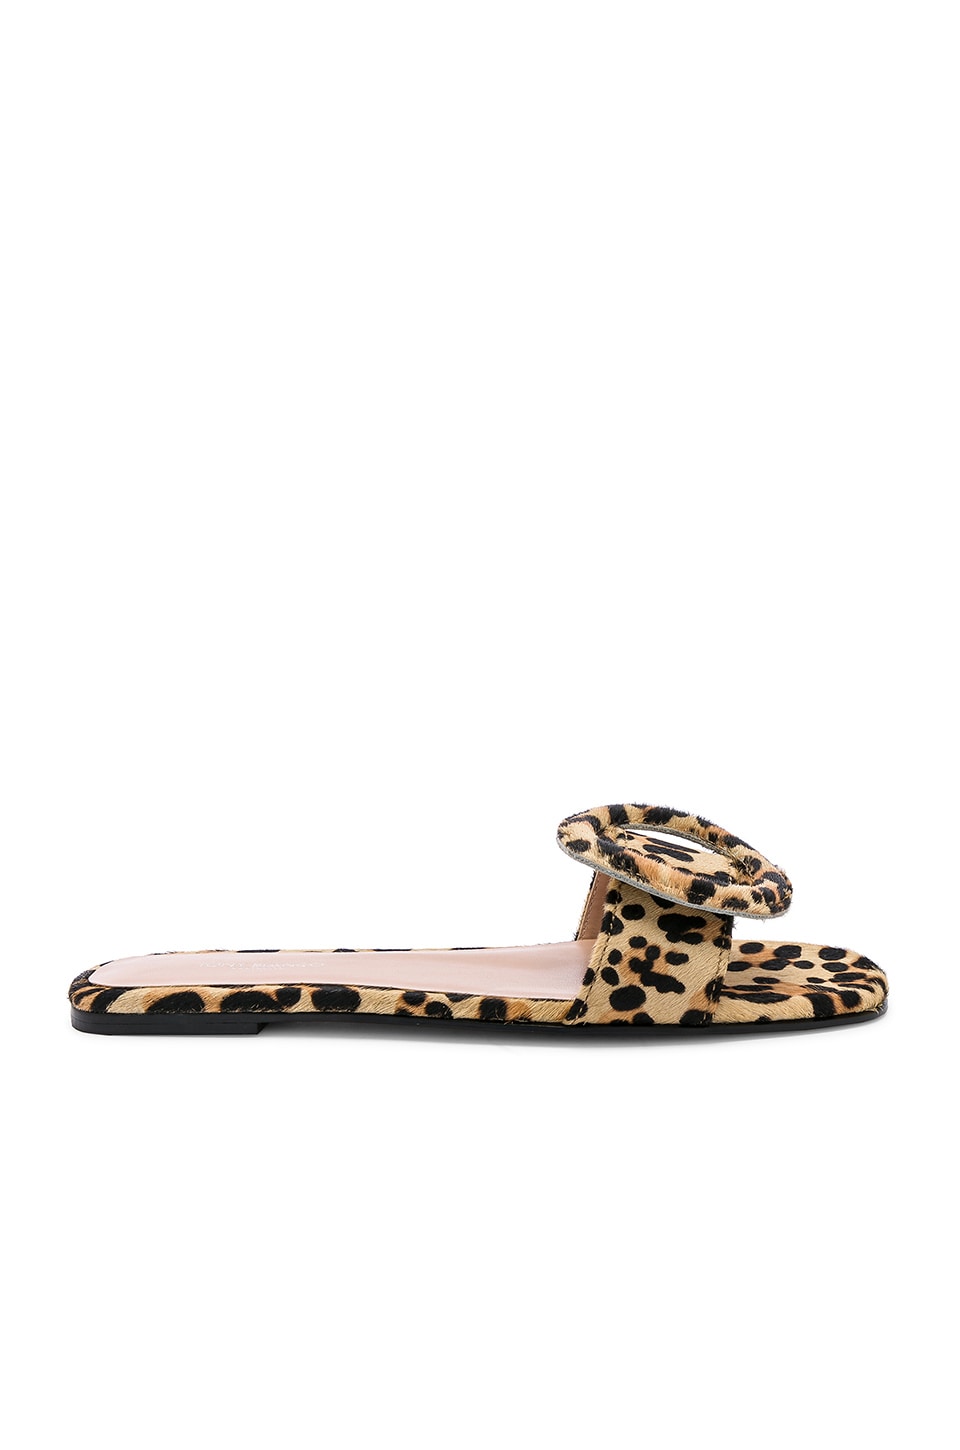 Women's Shoes Flat Leopard Animal Print Tie Up Sandals Flipflops Brand ...